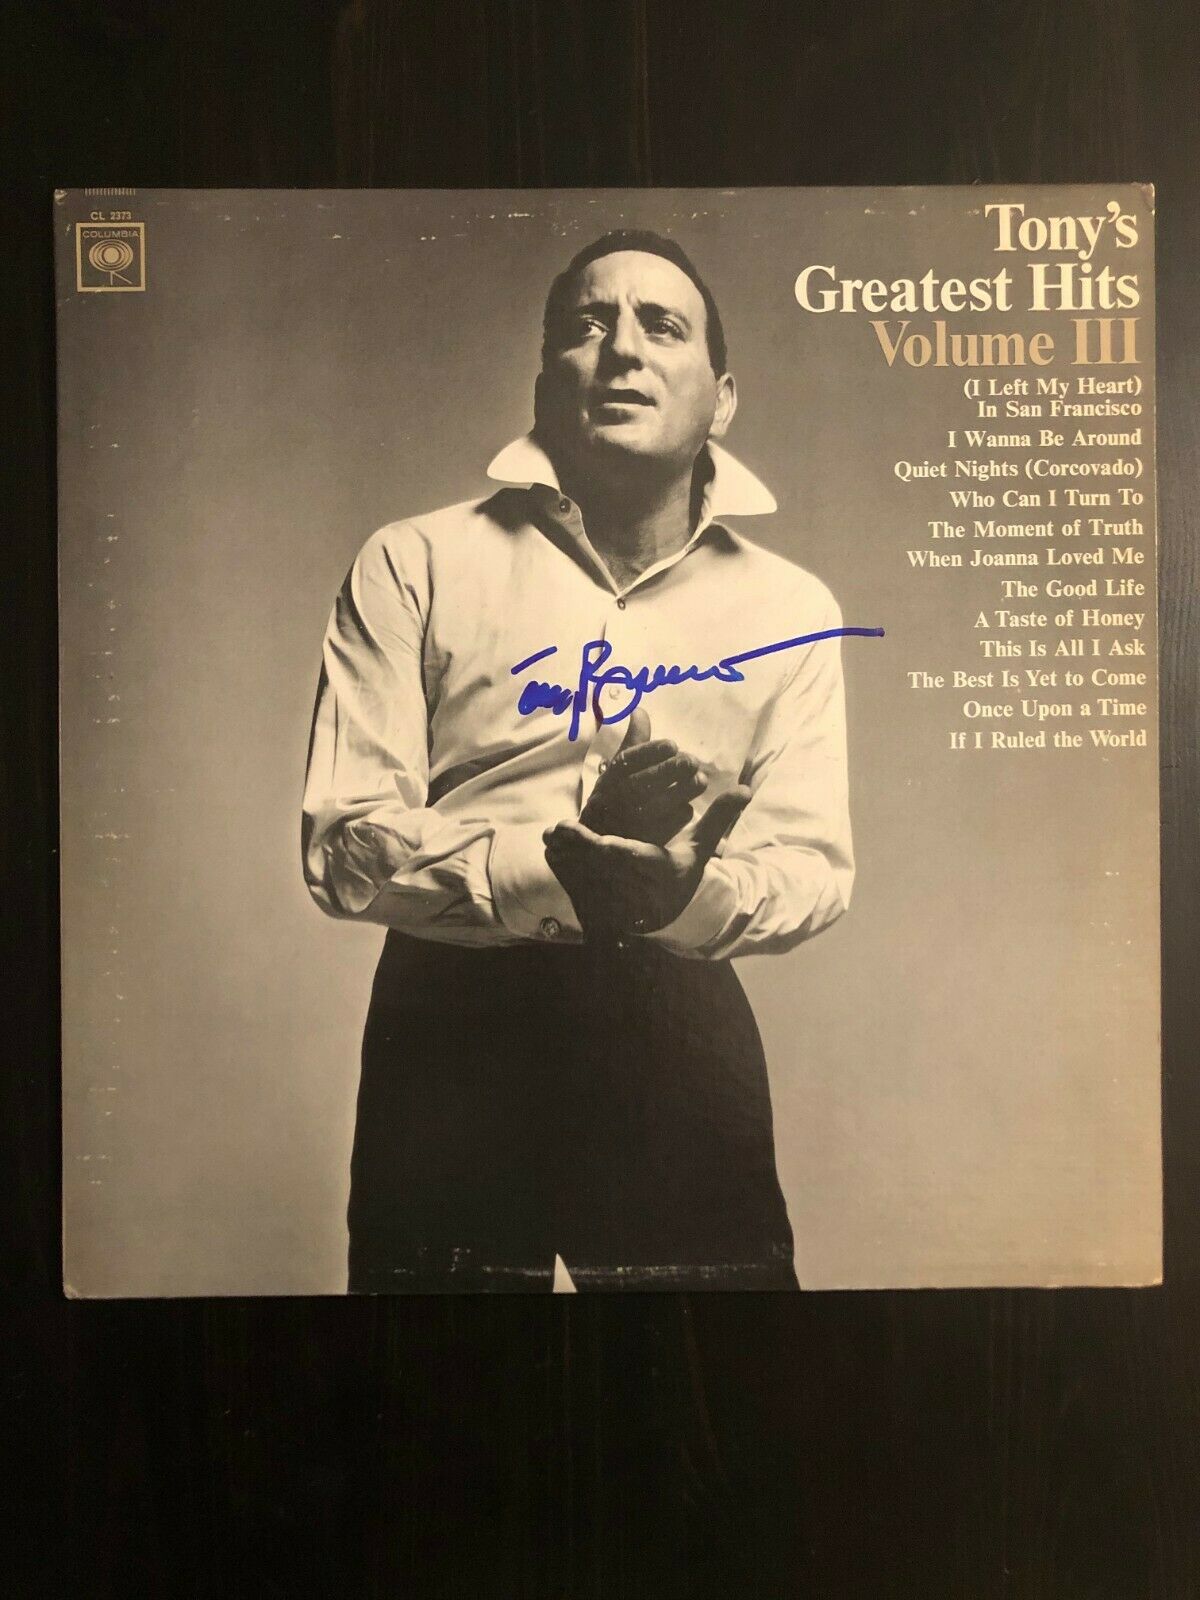 Tony Bennett Signed Autograph Vinyl Album Record Lp Tony S Greatest Hits Iii